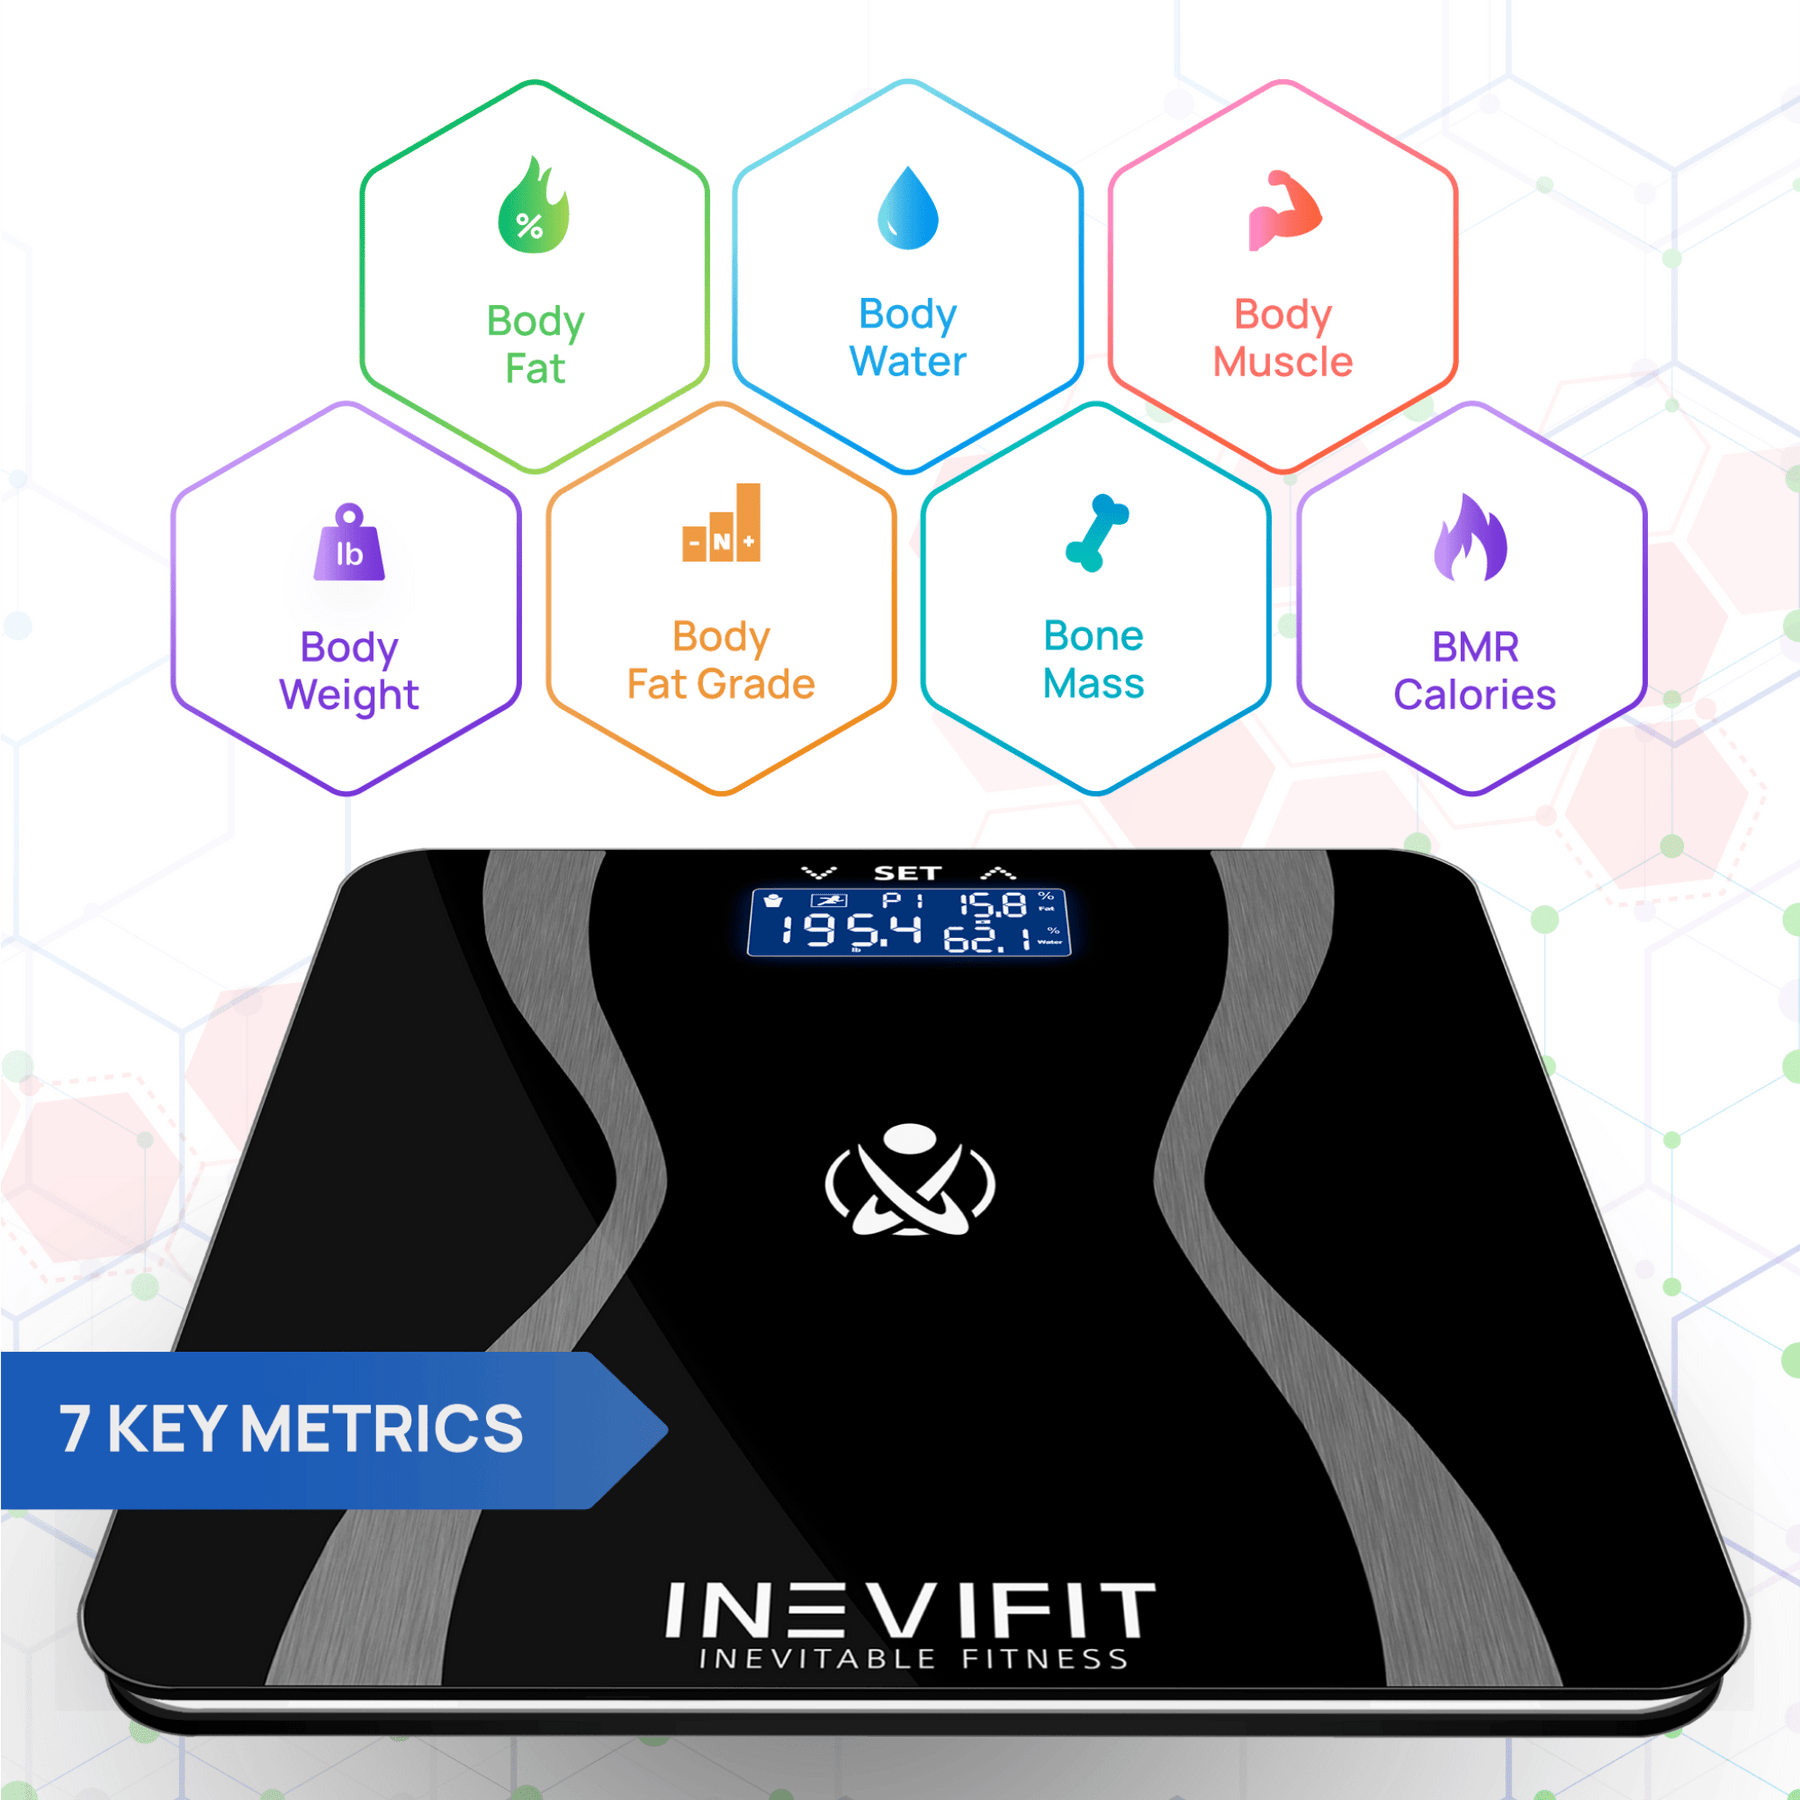 INEVIFIT Eros Bluetooth Smart Body Fat Scale 